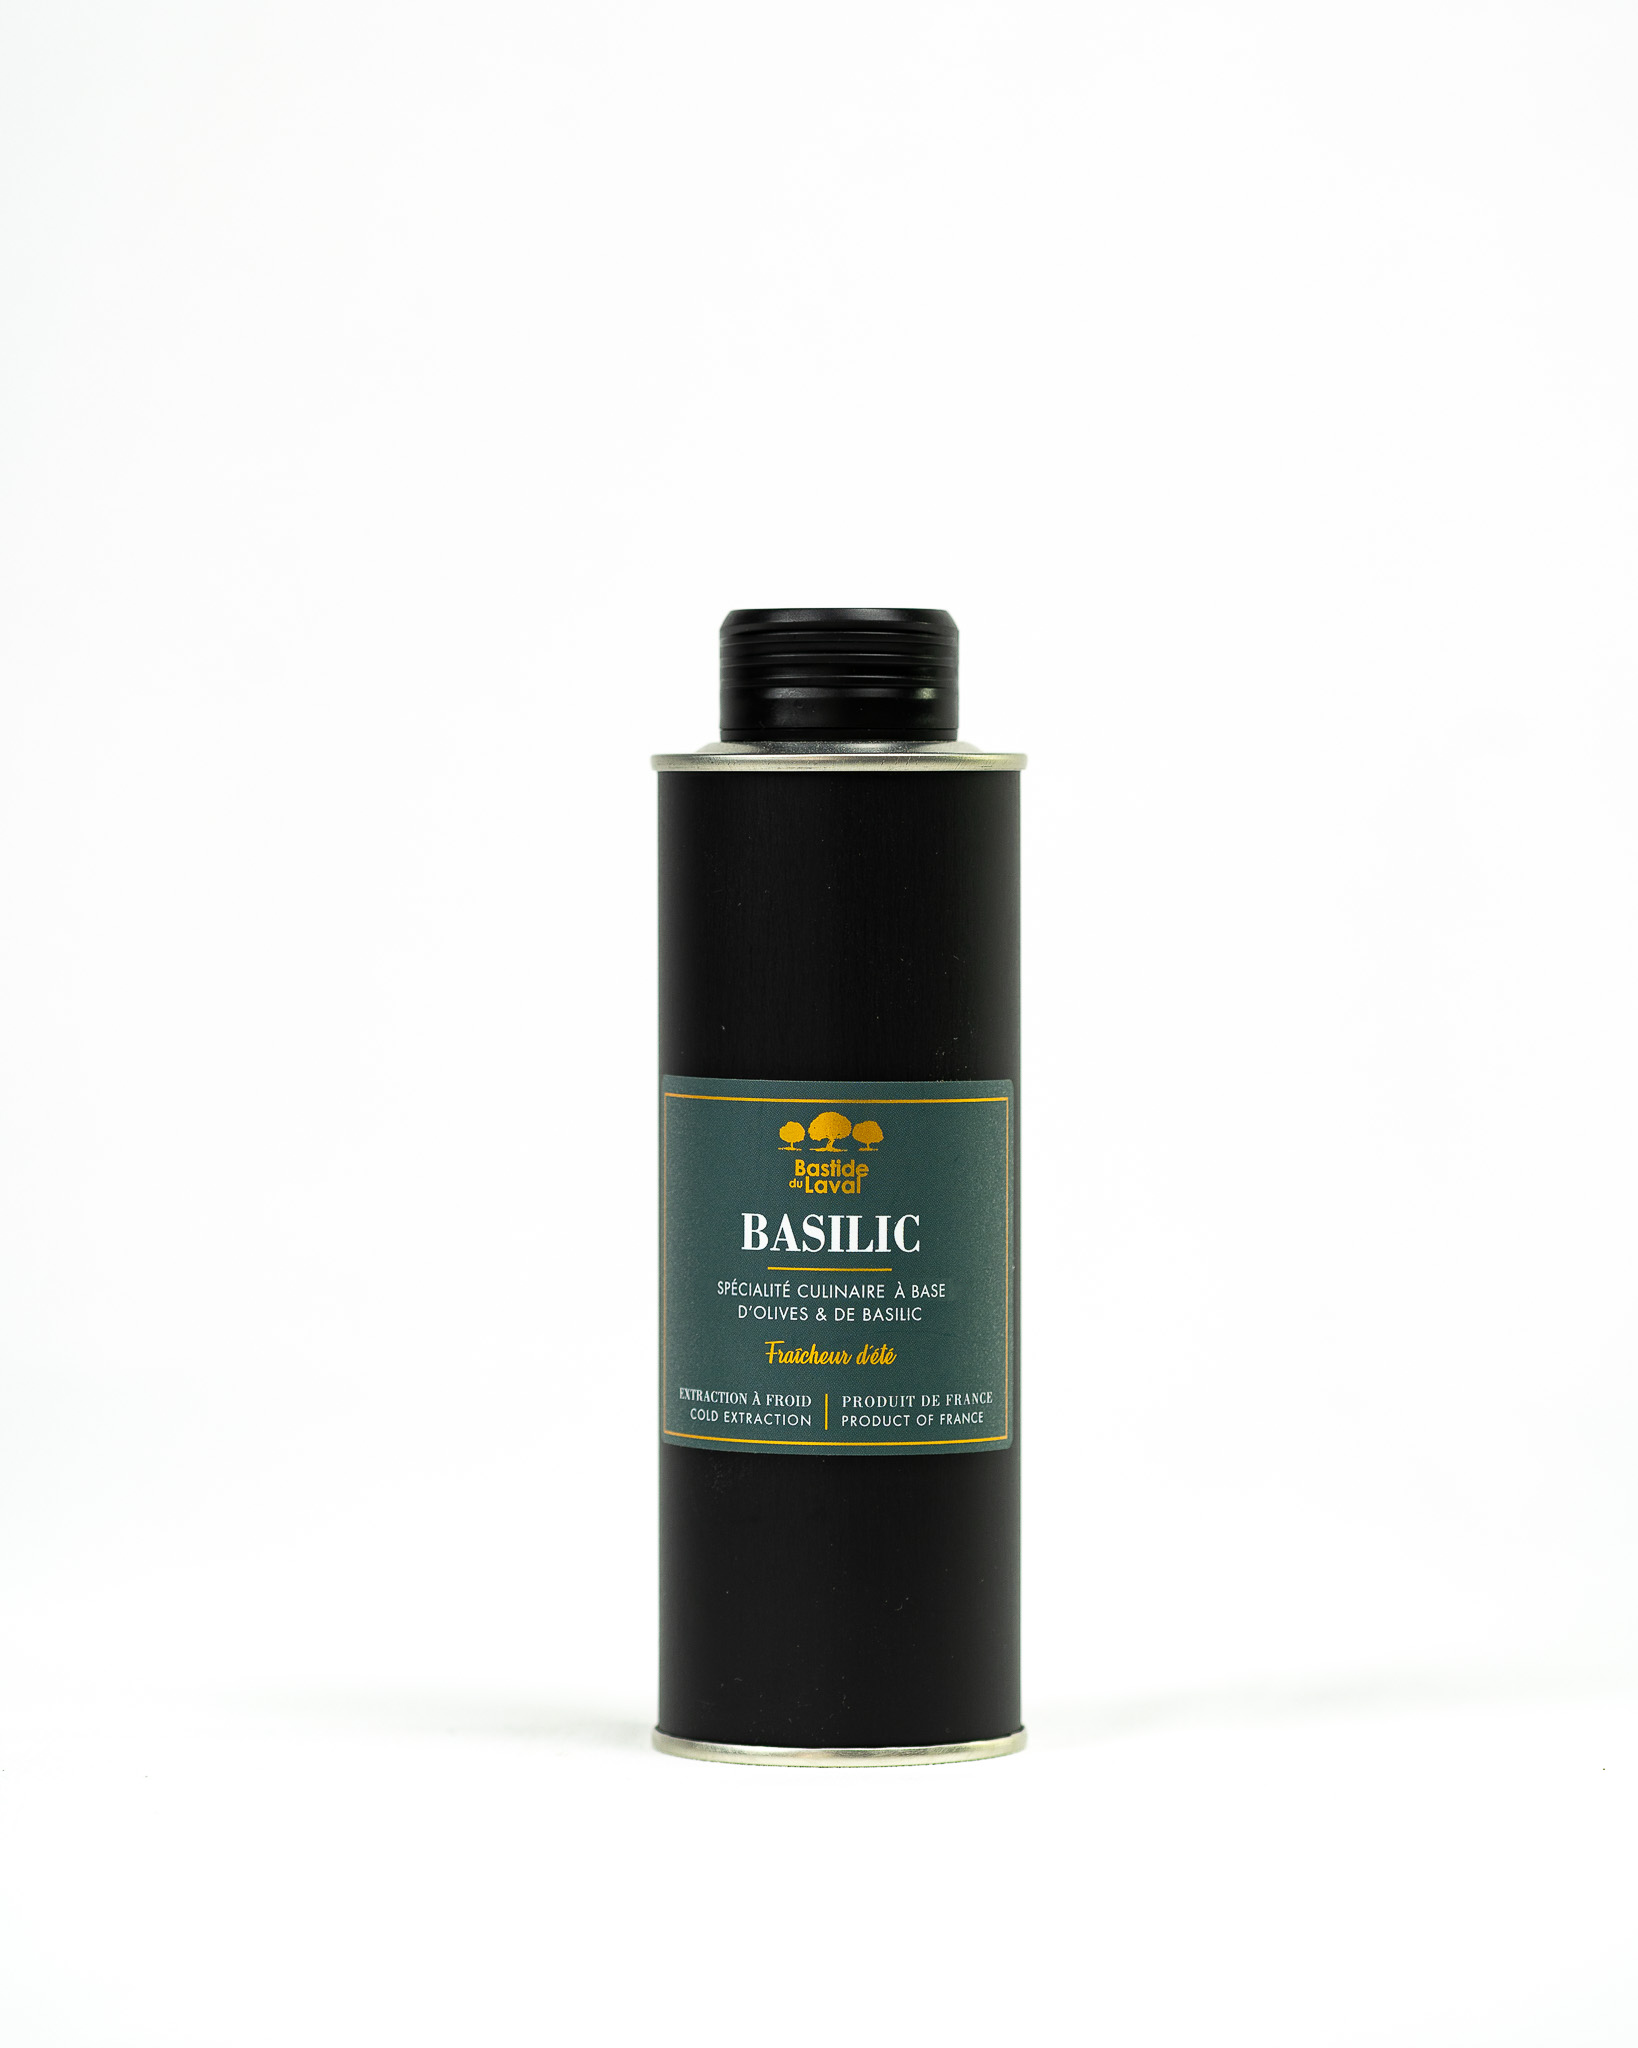 Olivenöl mit Basilikum 25cl